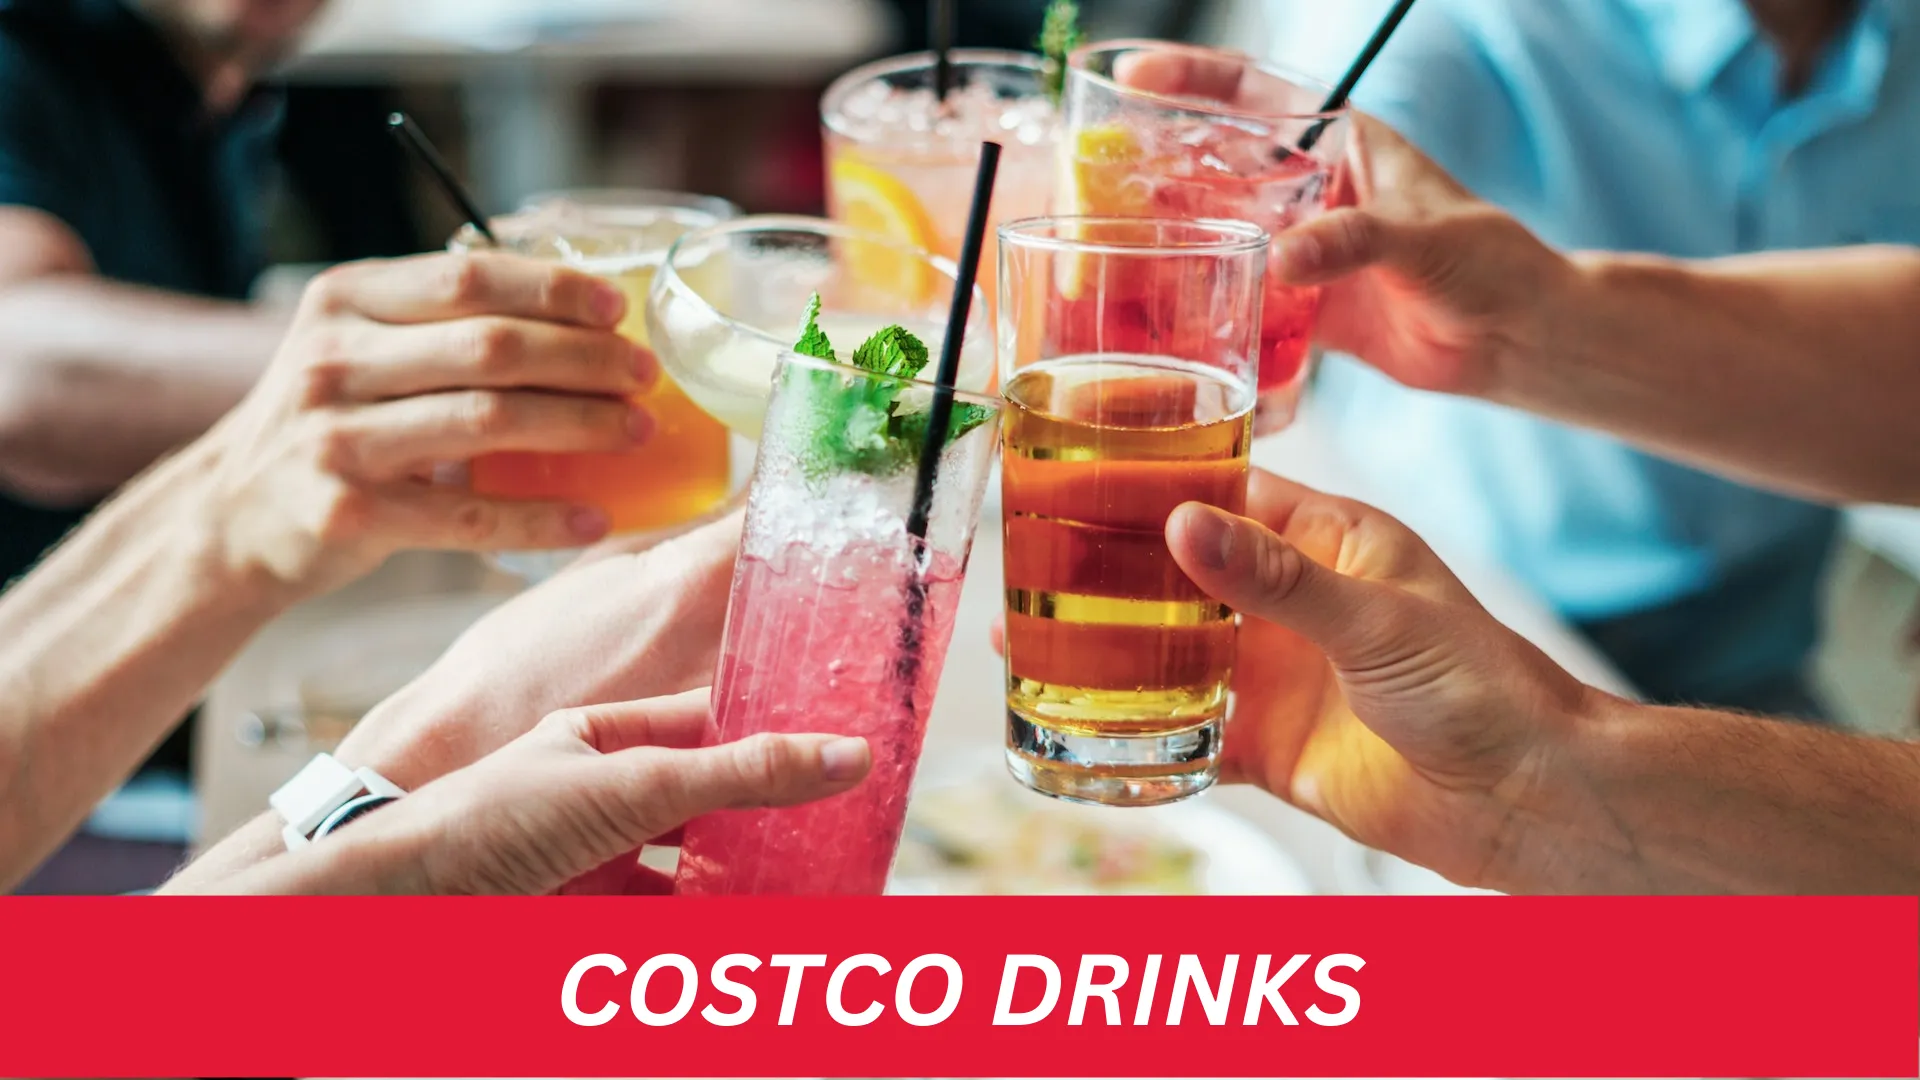 COSTCO DRINKS